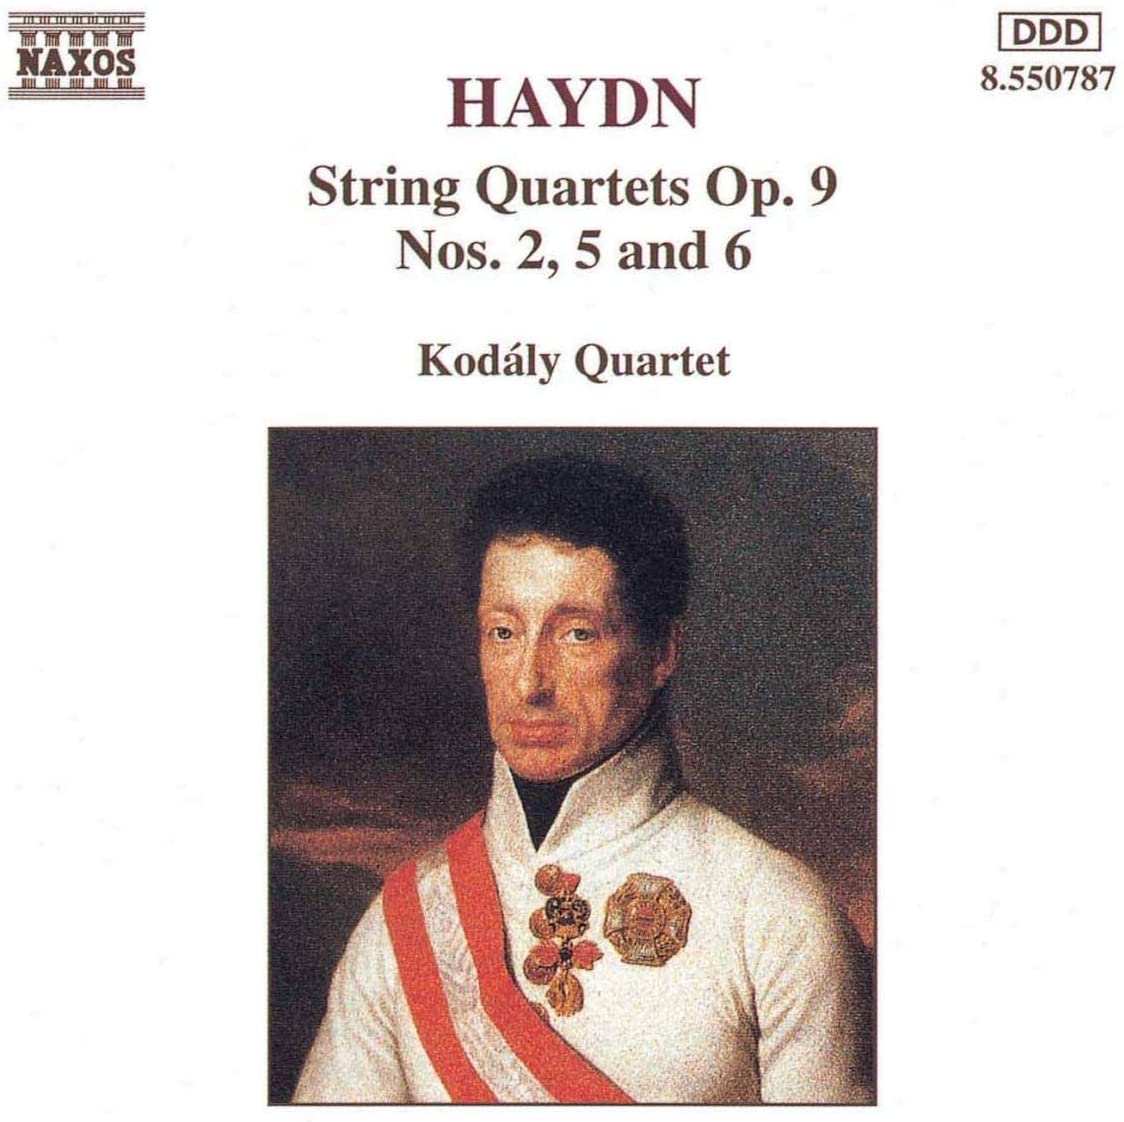 HAYDN: String Quartets op. 9 vol. 2